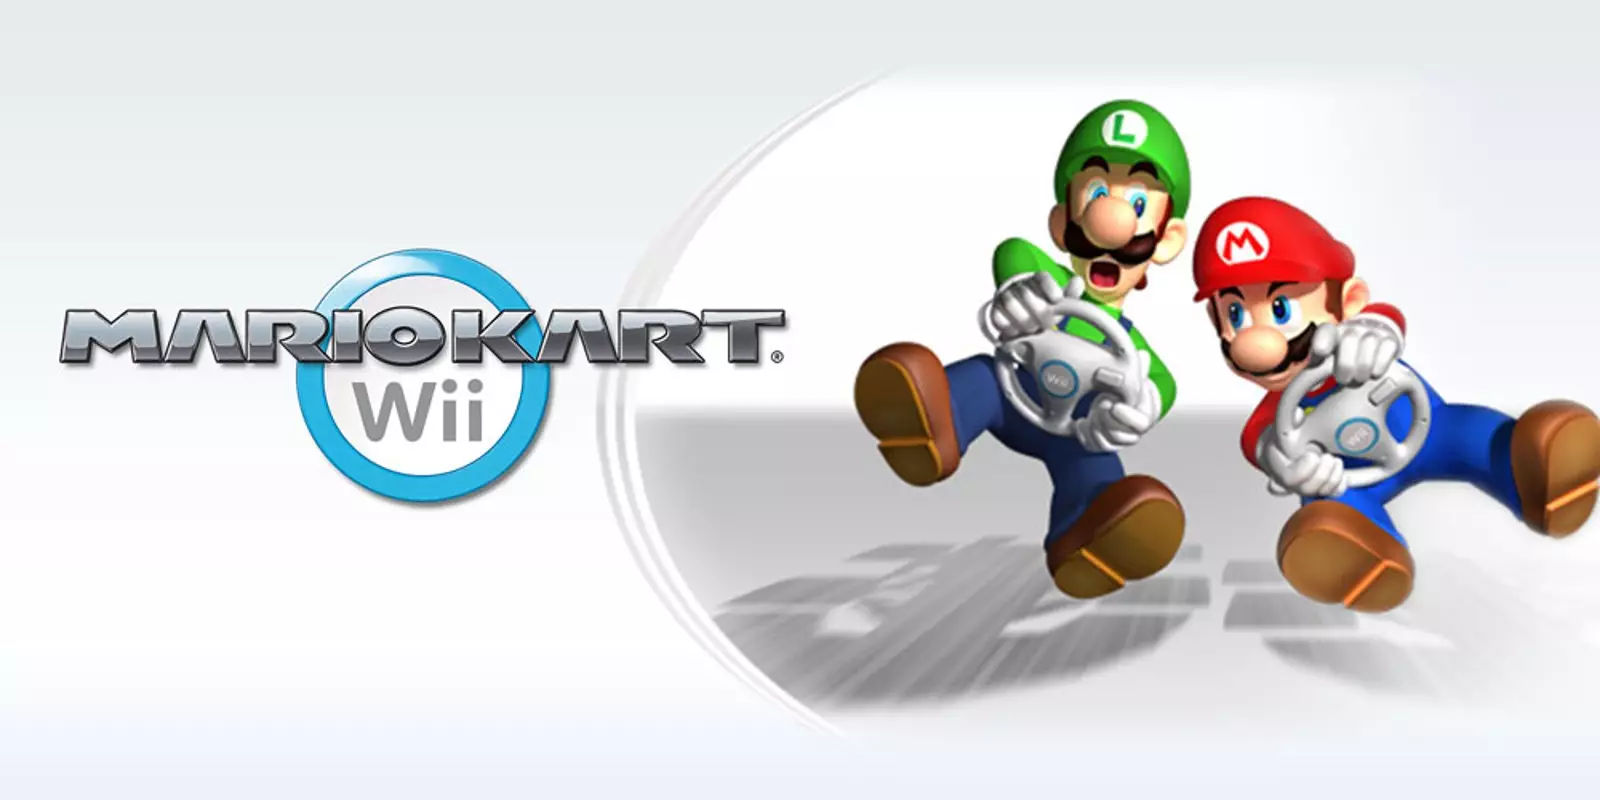 Mario Kart Wii /